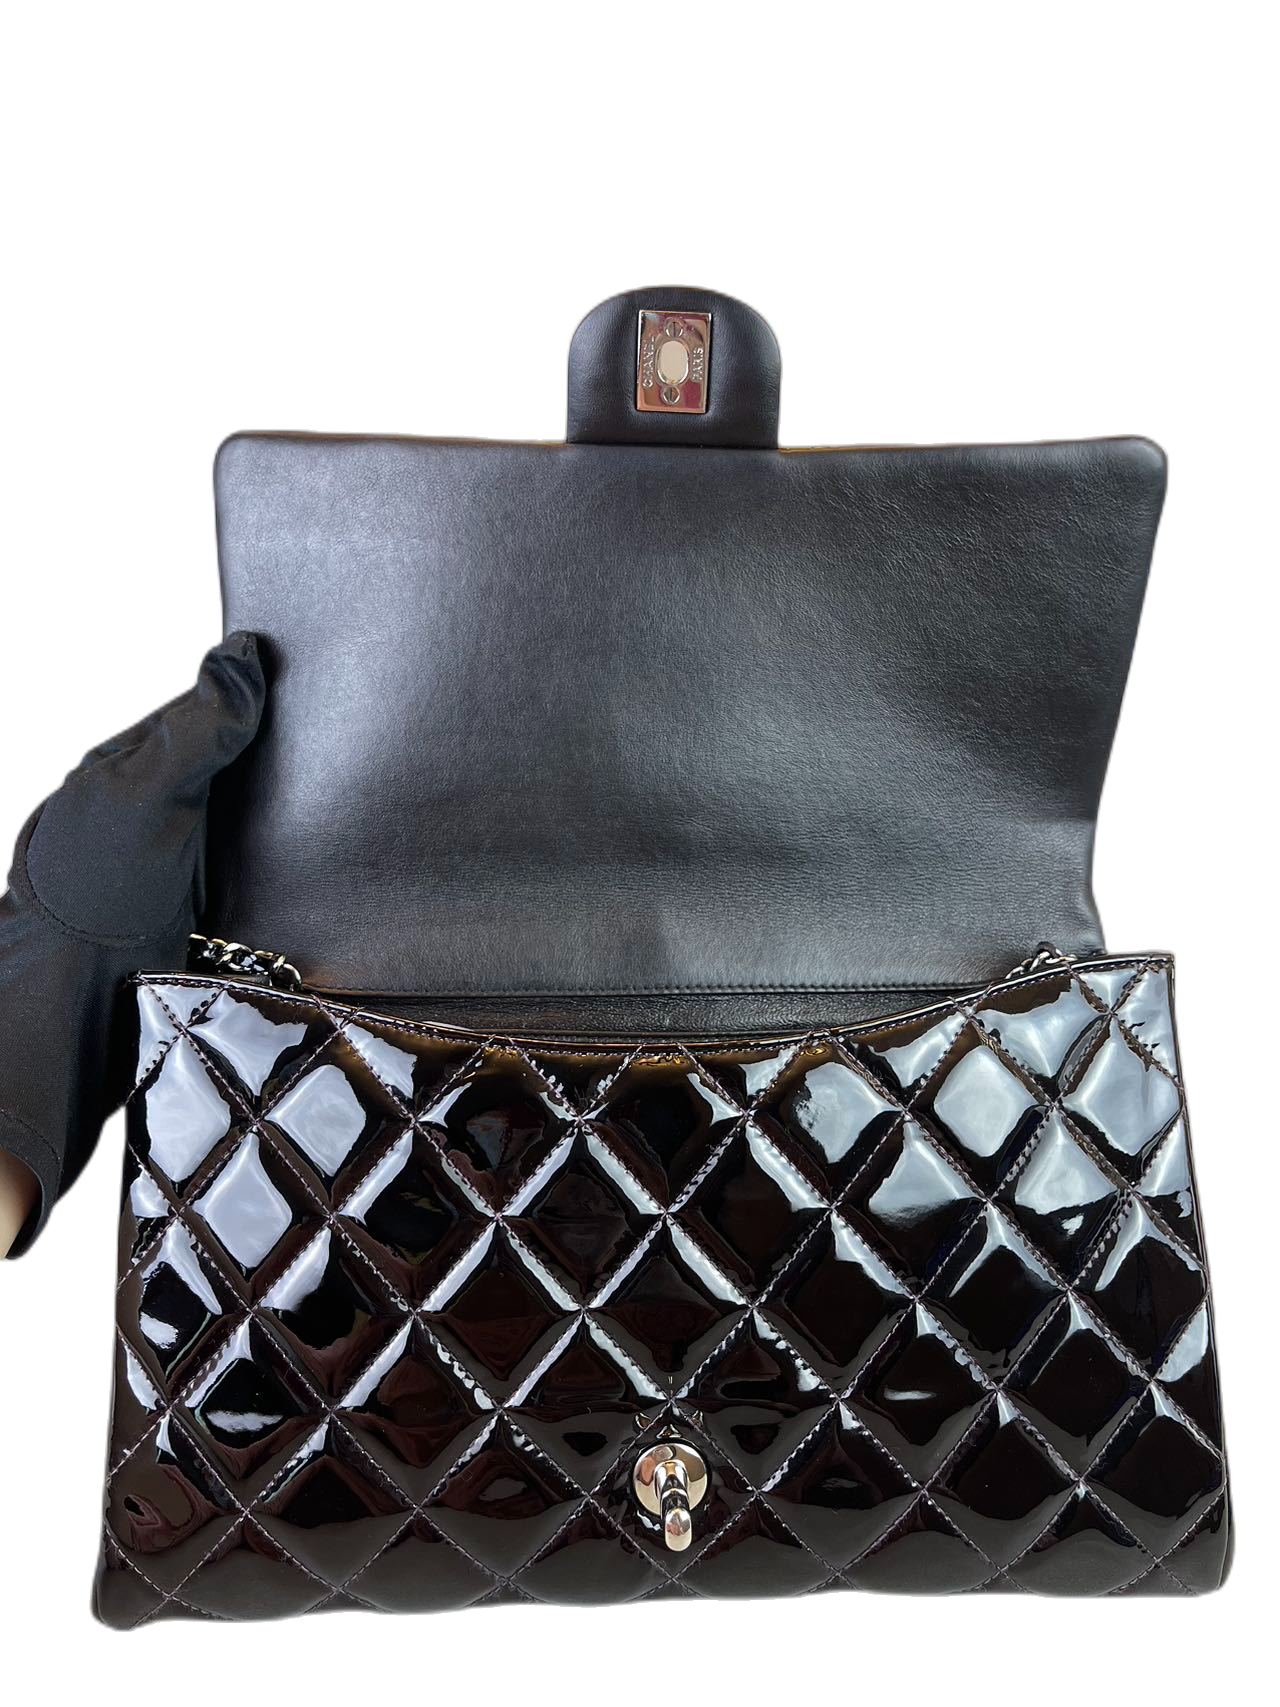 Preloved CHANEL Black Patent Leather Classic Flap Shoulder Bag